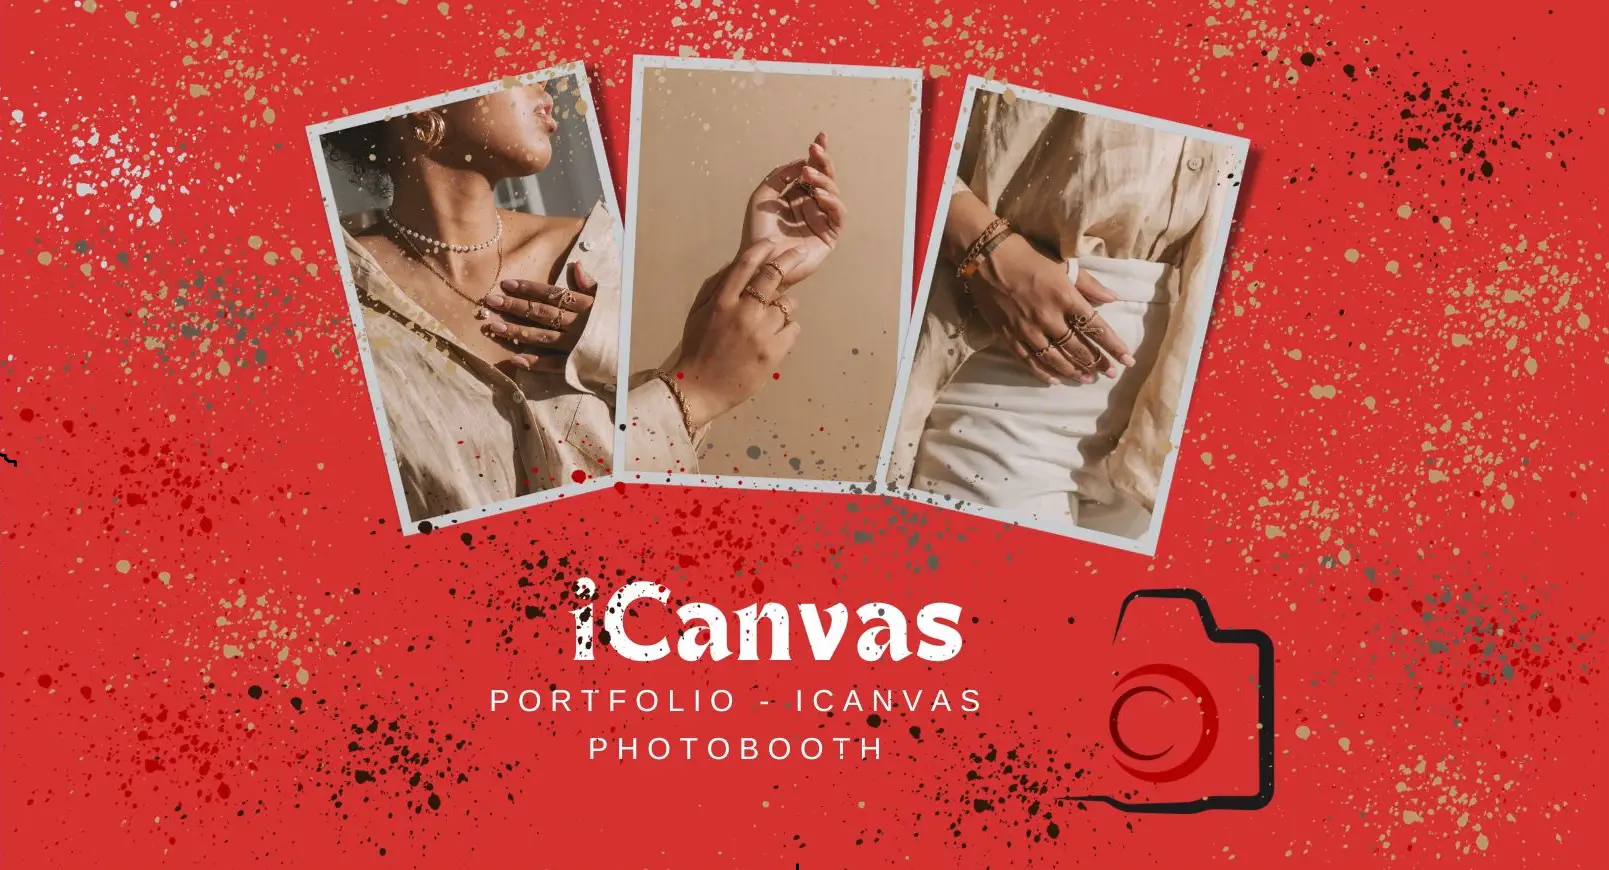 iCanvas Photobooth